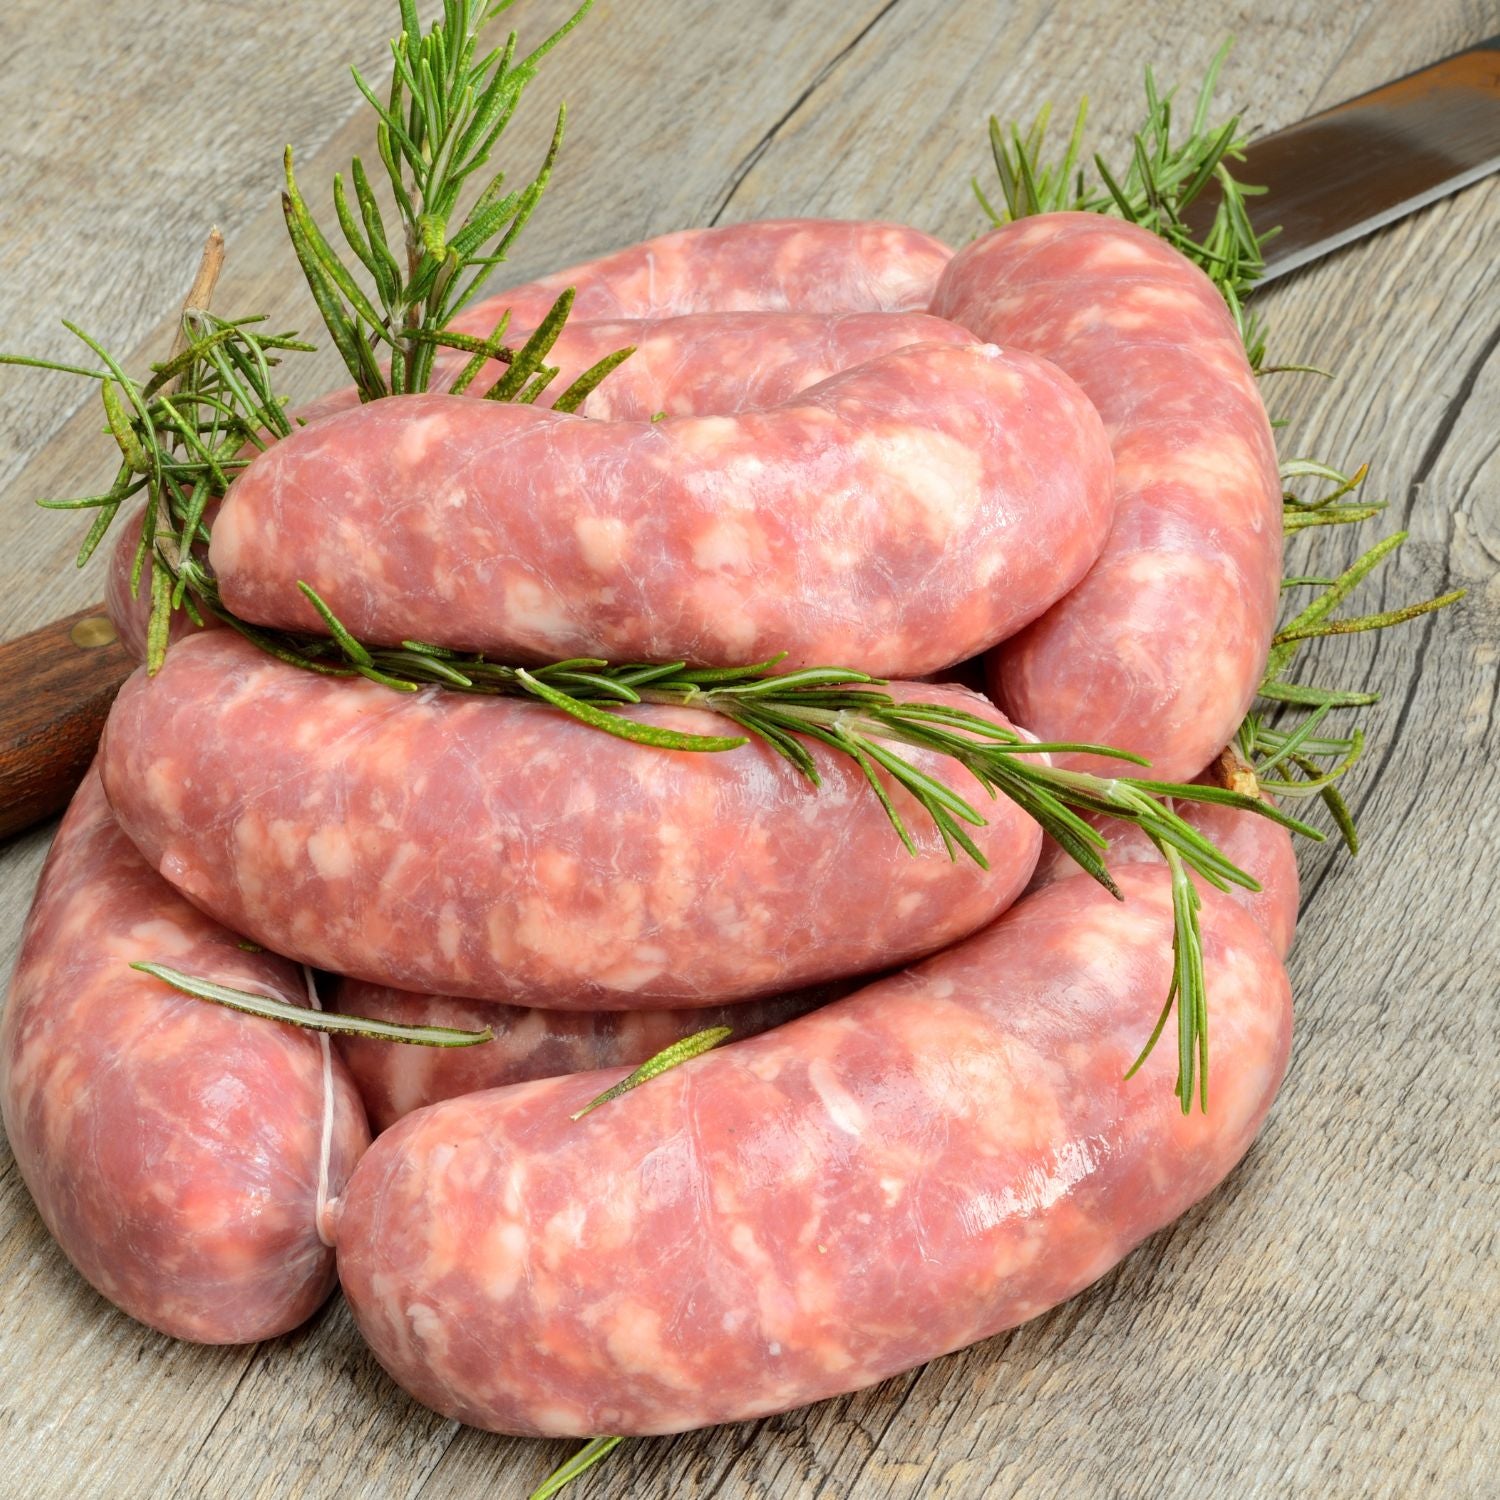 Indulge in the Juicy Flavor of New Zealand Premium Pork Cumberland Sausages - Buy Now!